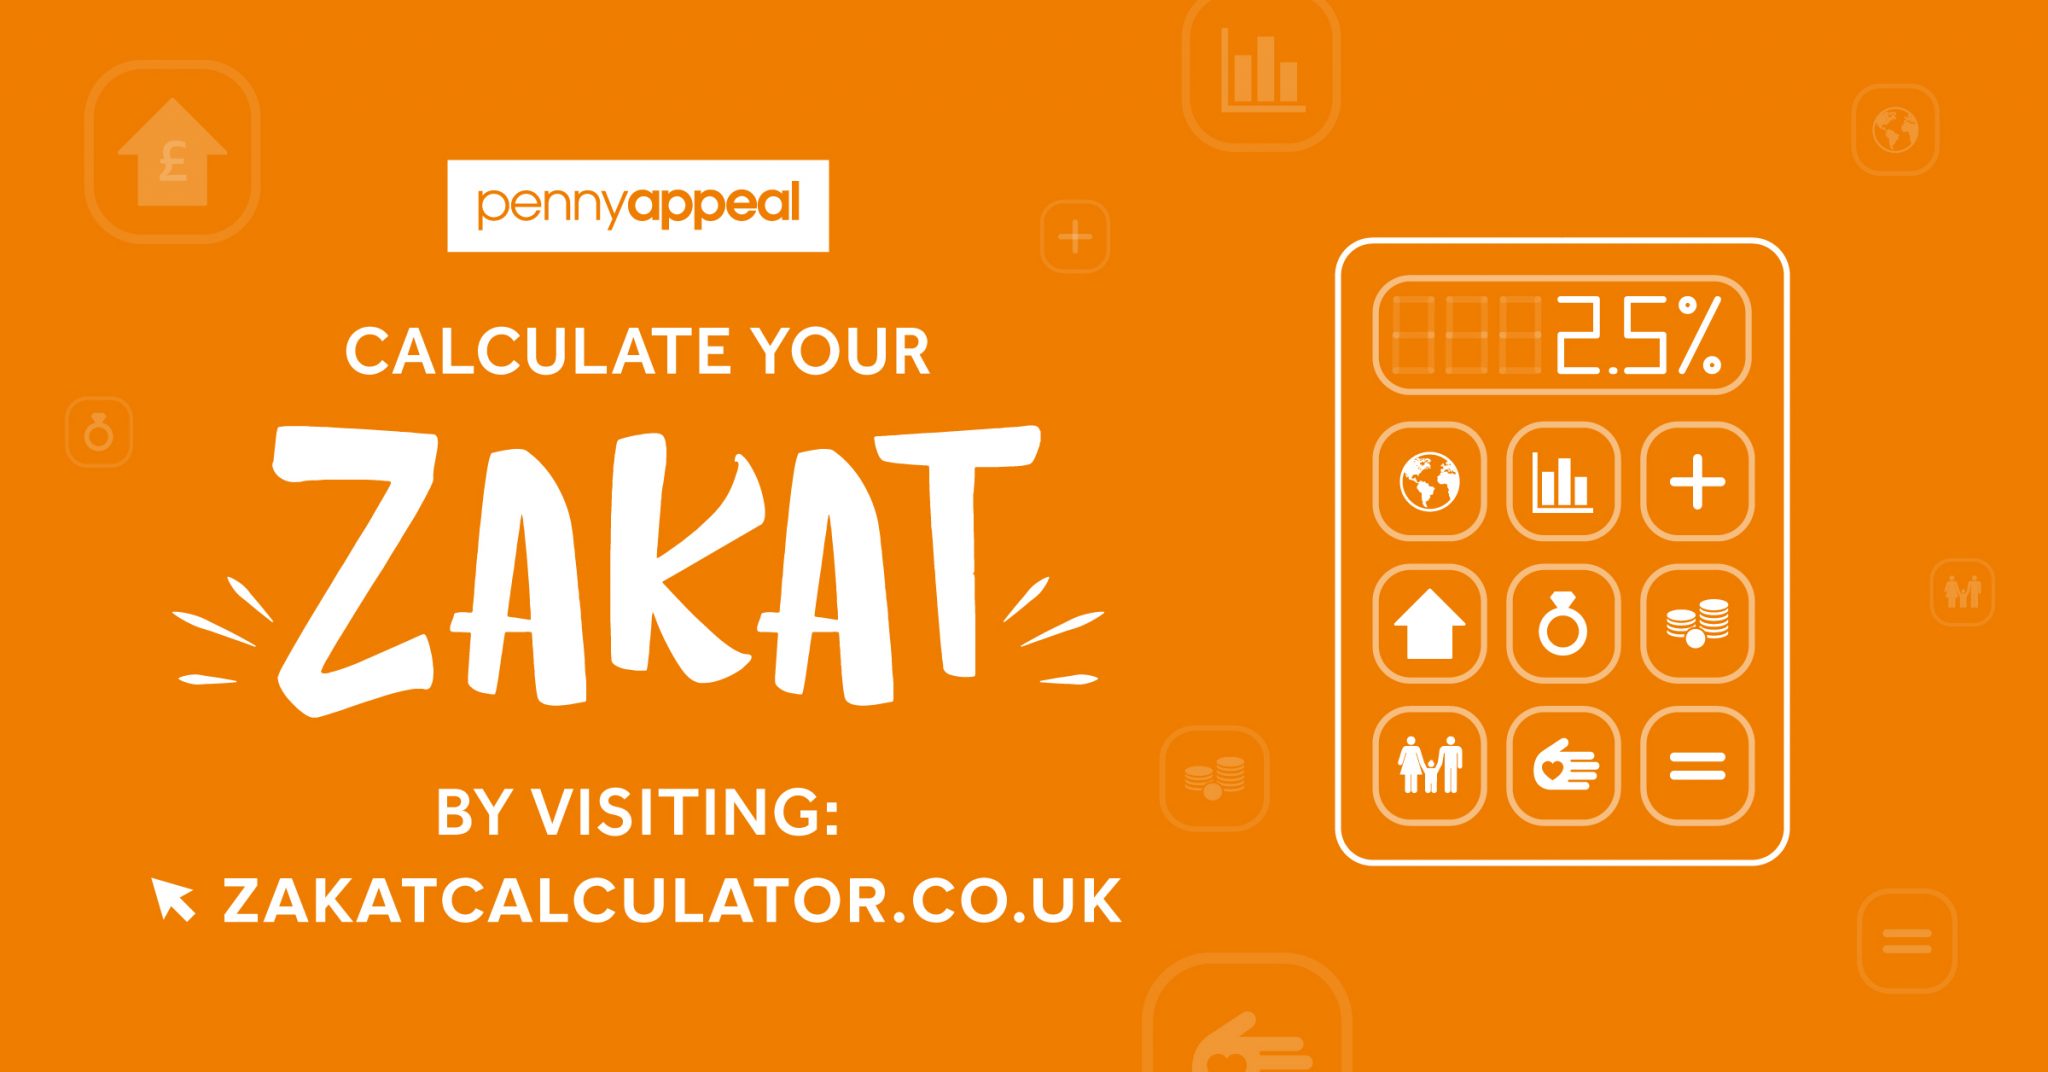 Calculate your zakat